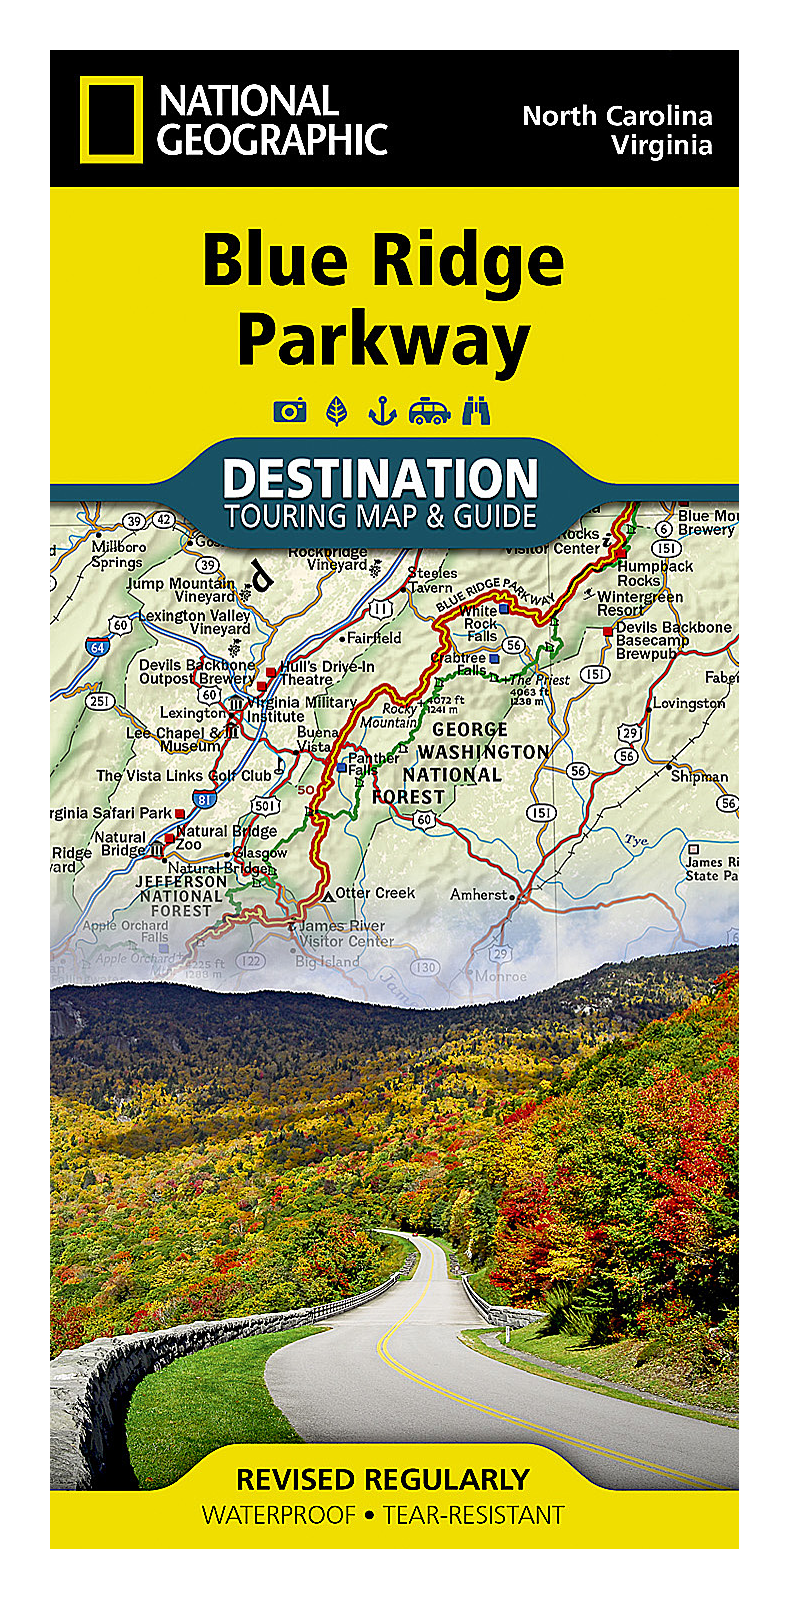 National Geographic Destination Touring Map & Guide Series - North Carolina/Virginia - Blue Ridge Parkway